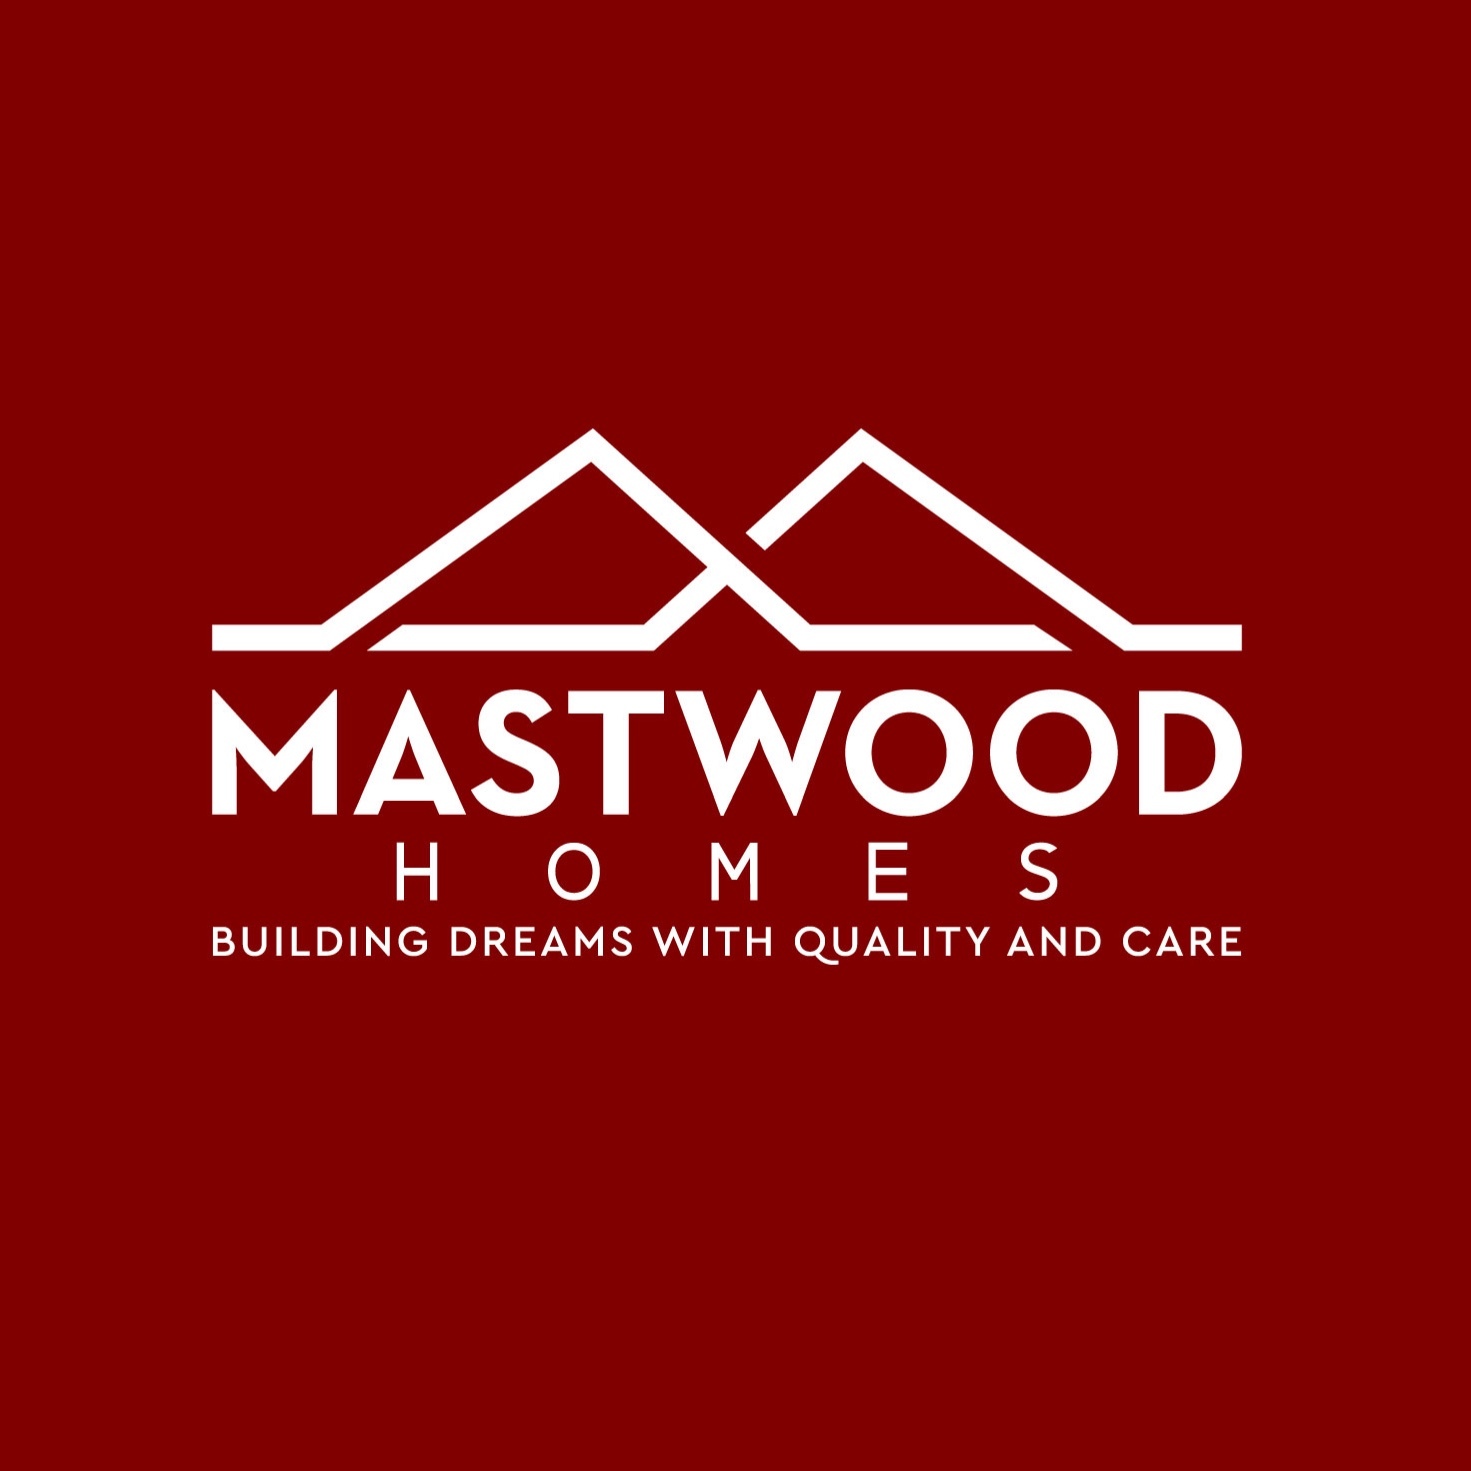 Mastwood Homes's logo